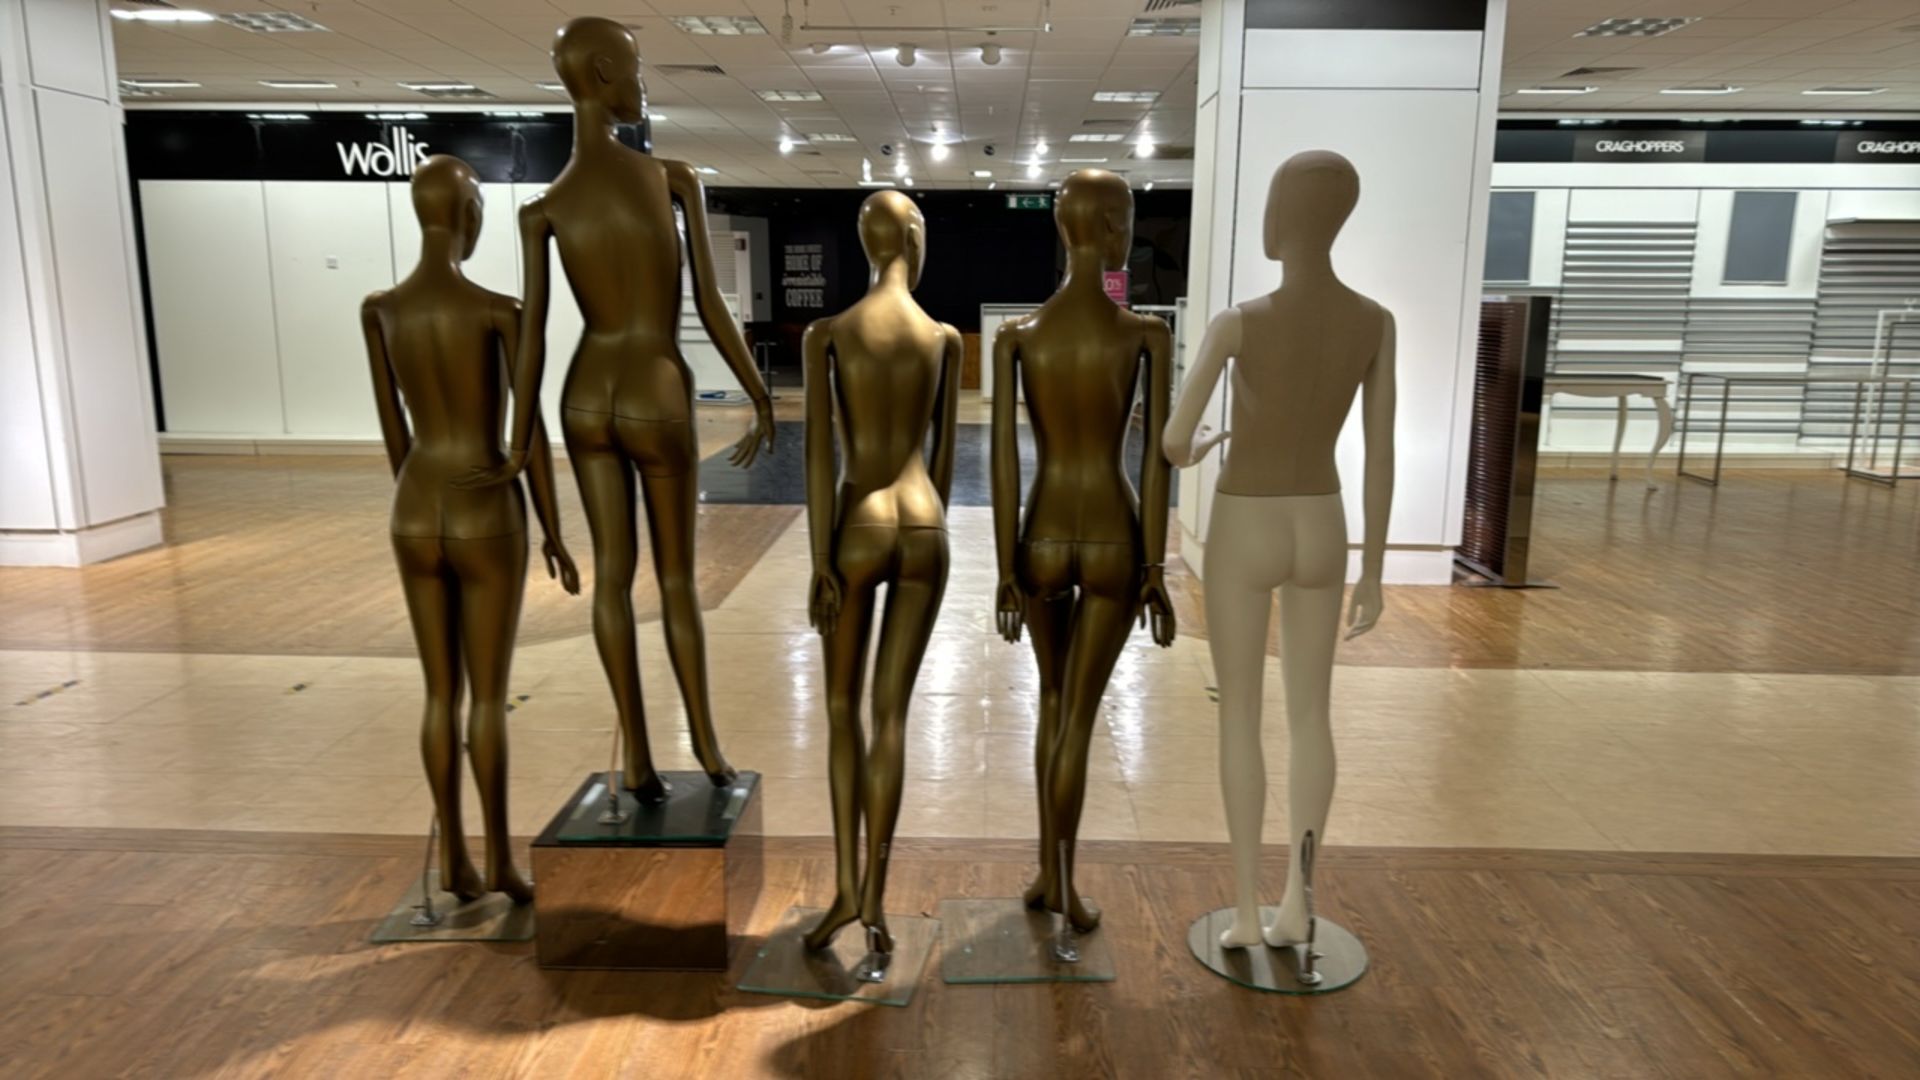 Set of 5 Female Mannequins - Image 2 of 4